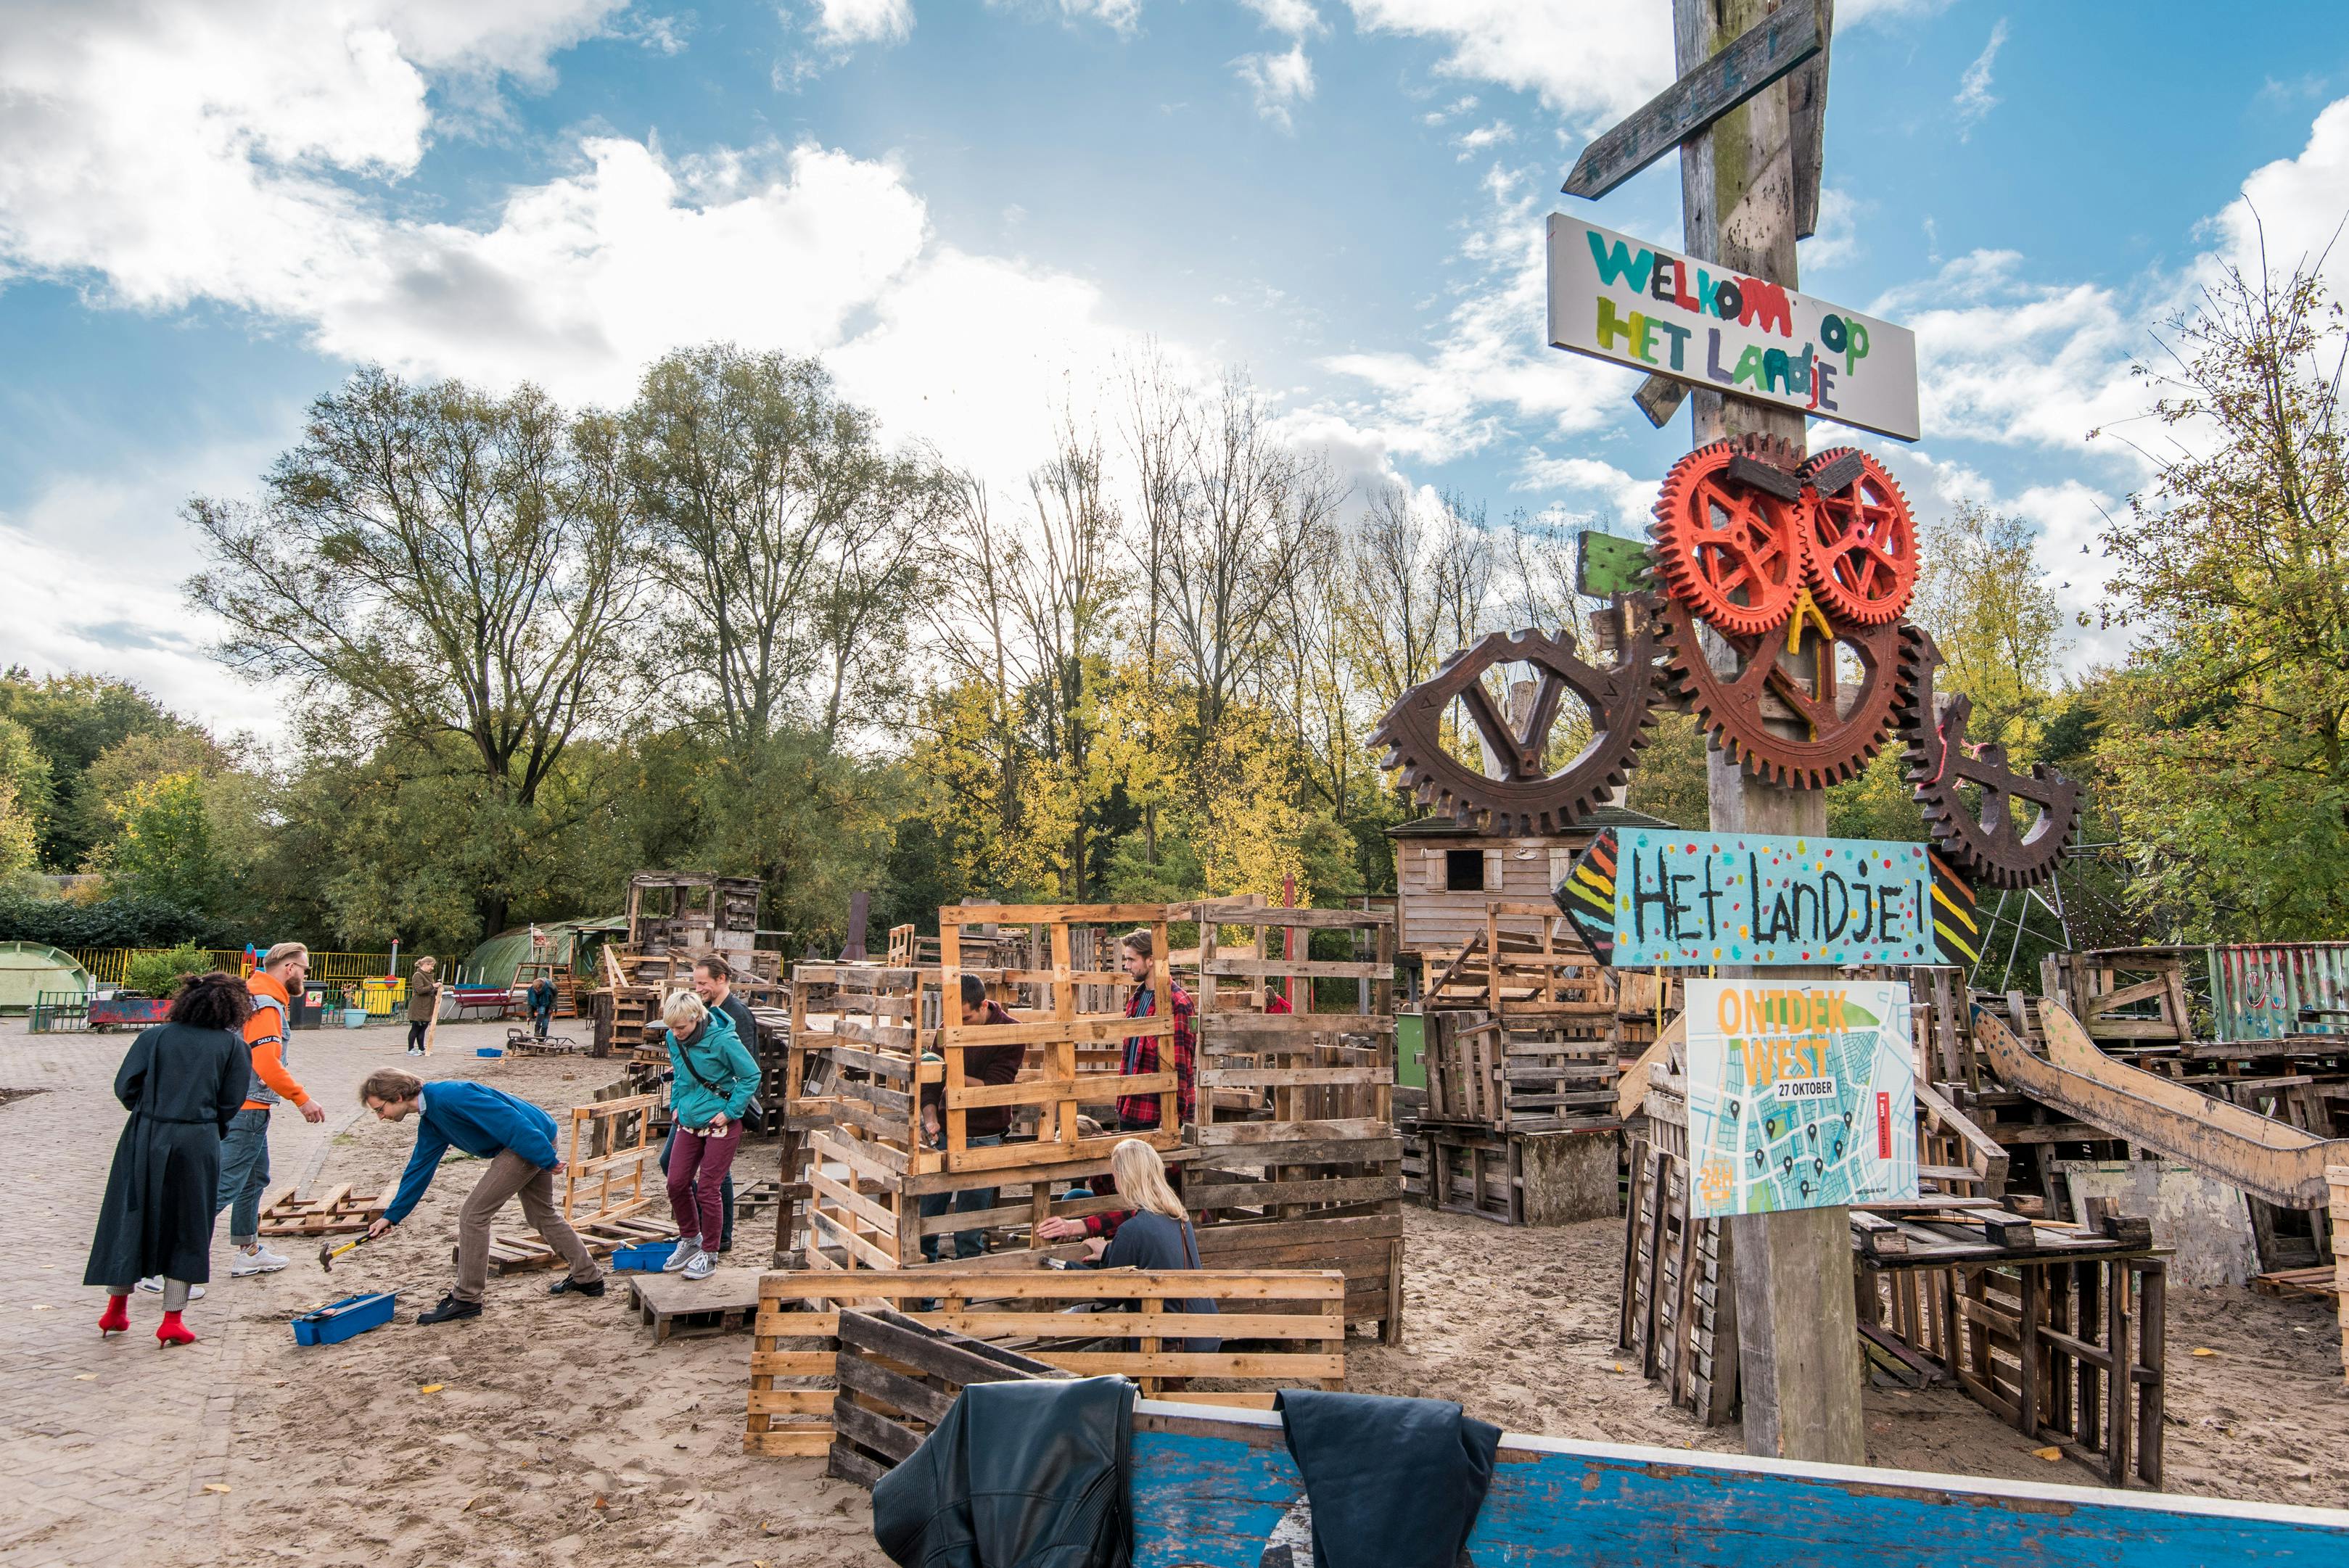 24 Hours West: Spring Fest at Het Landje (6-14 years)